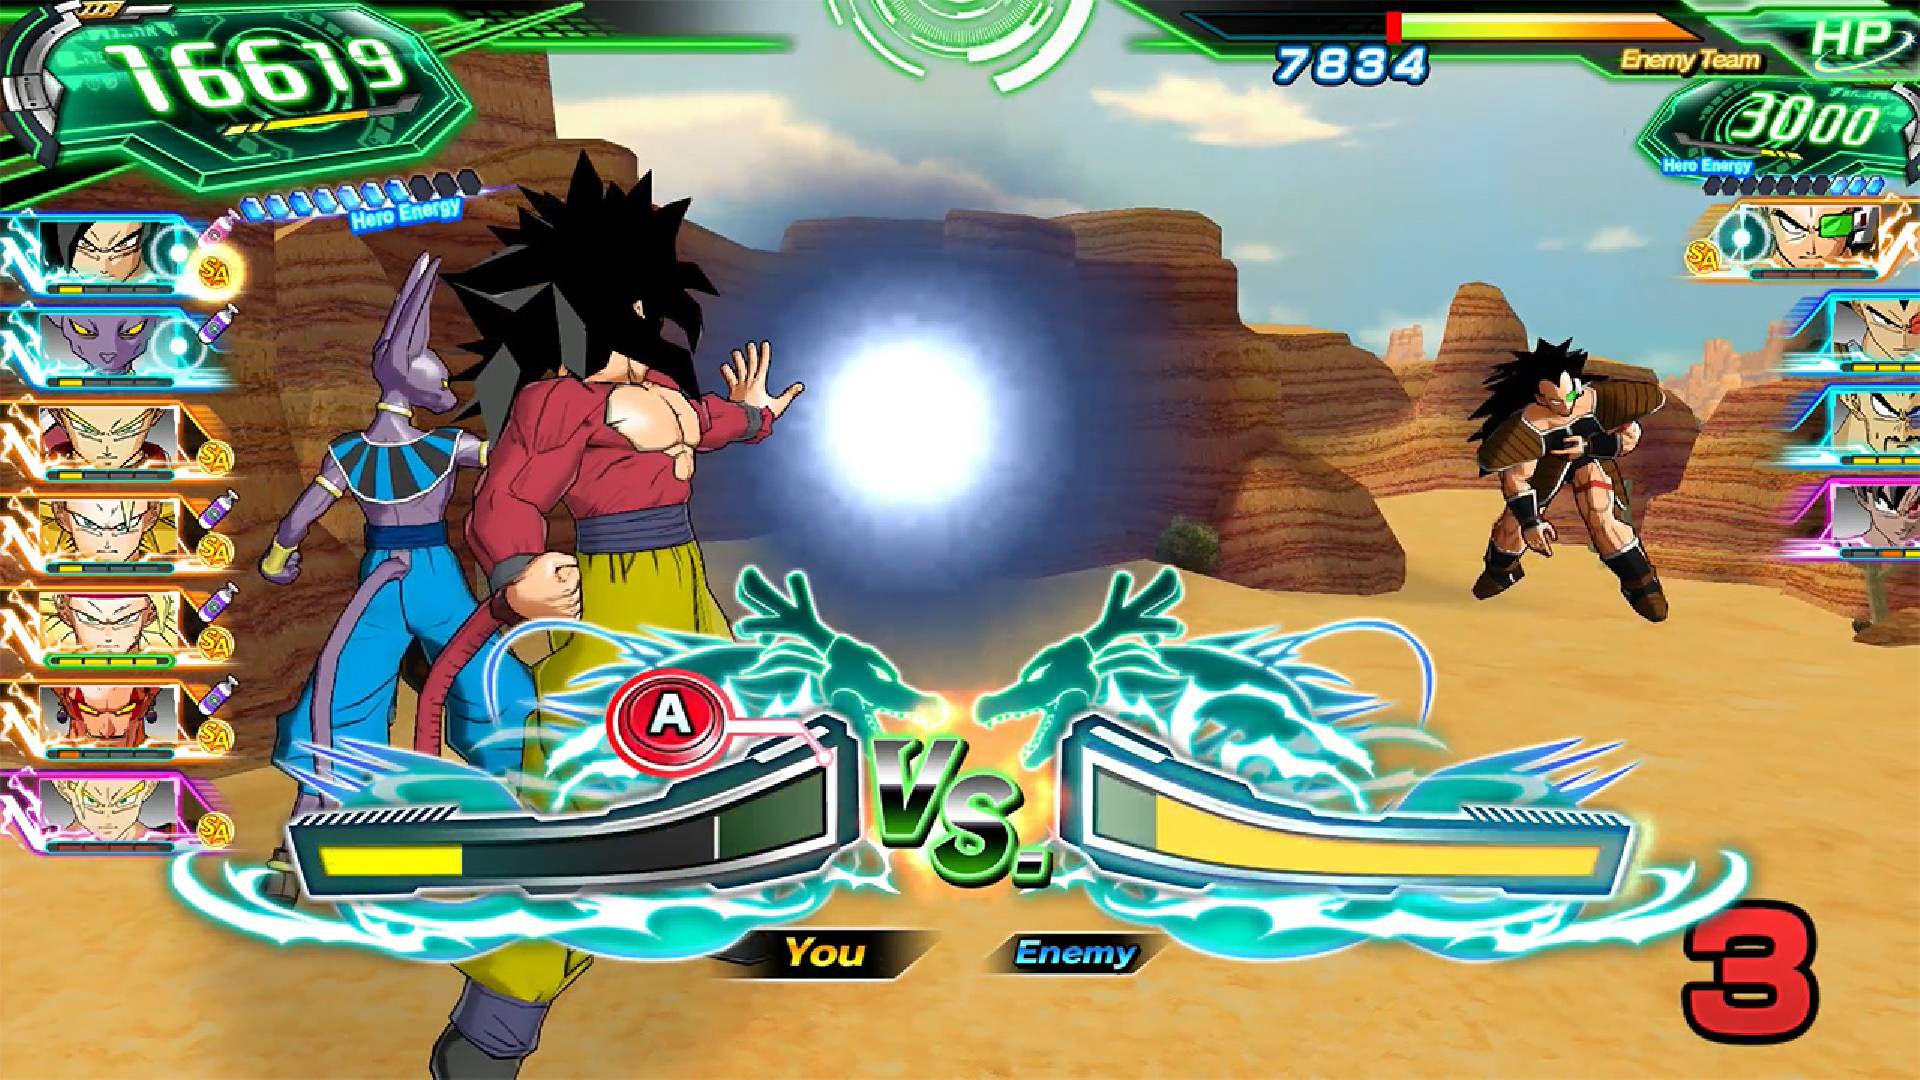 Best Dragon Ball games: SSj4 Goku charges a ki blast against enemies 